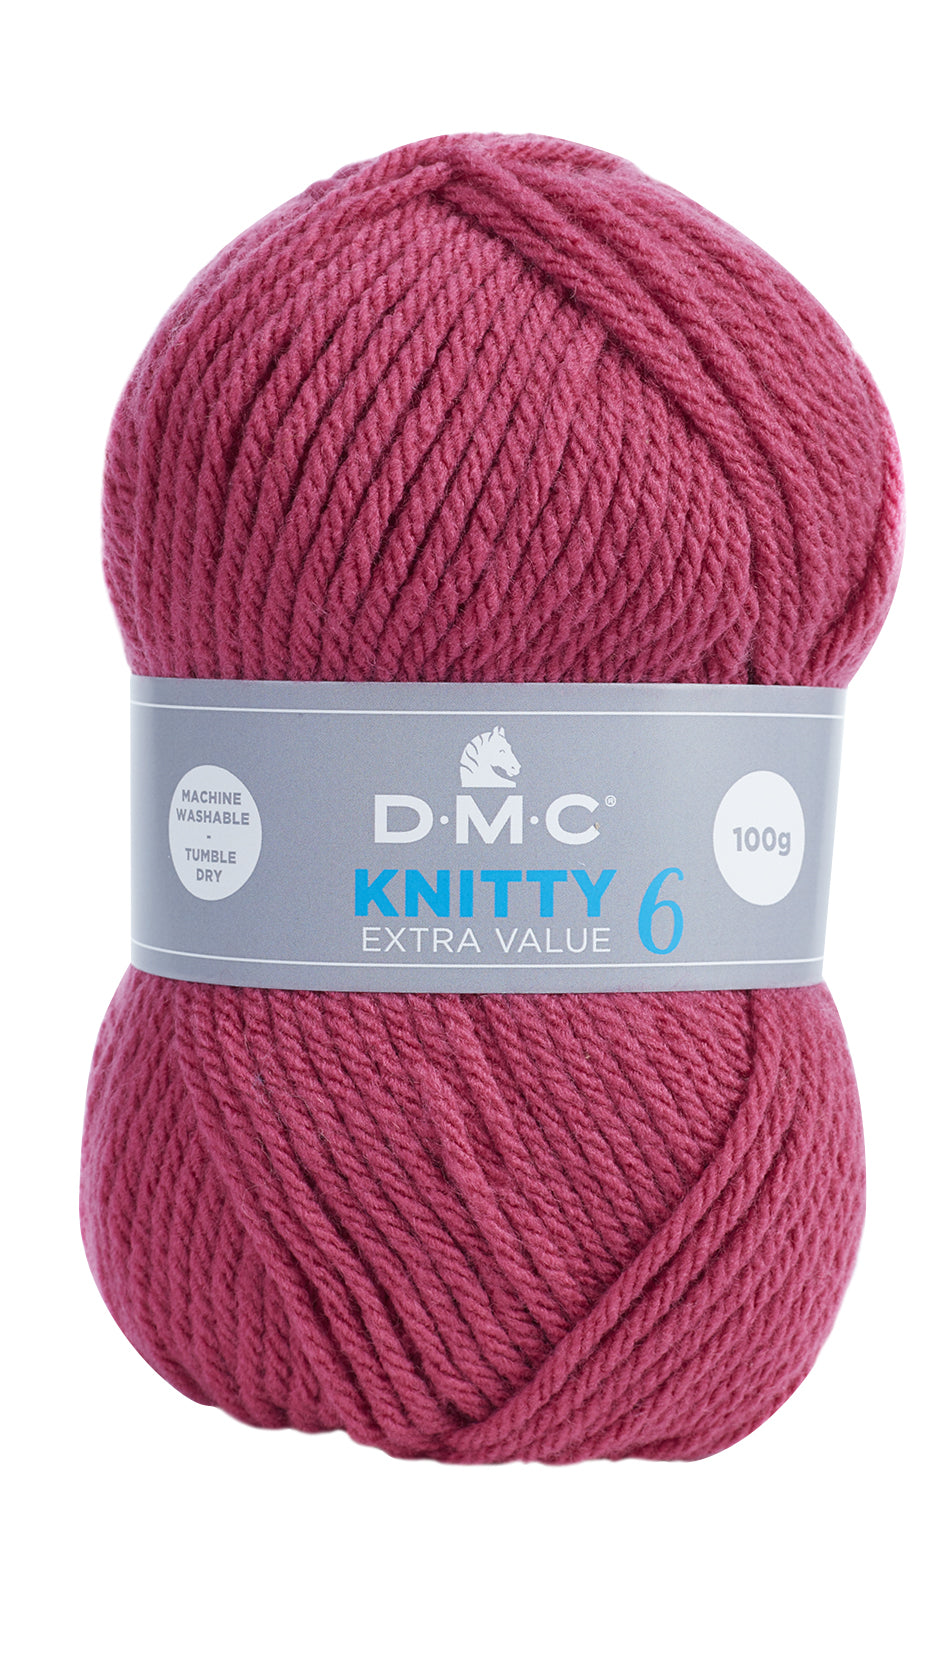 Lana Dmc Knitty 6 Colore 846